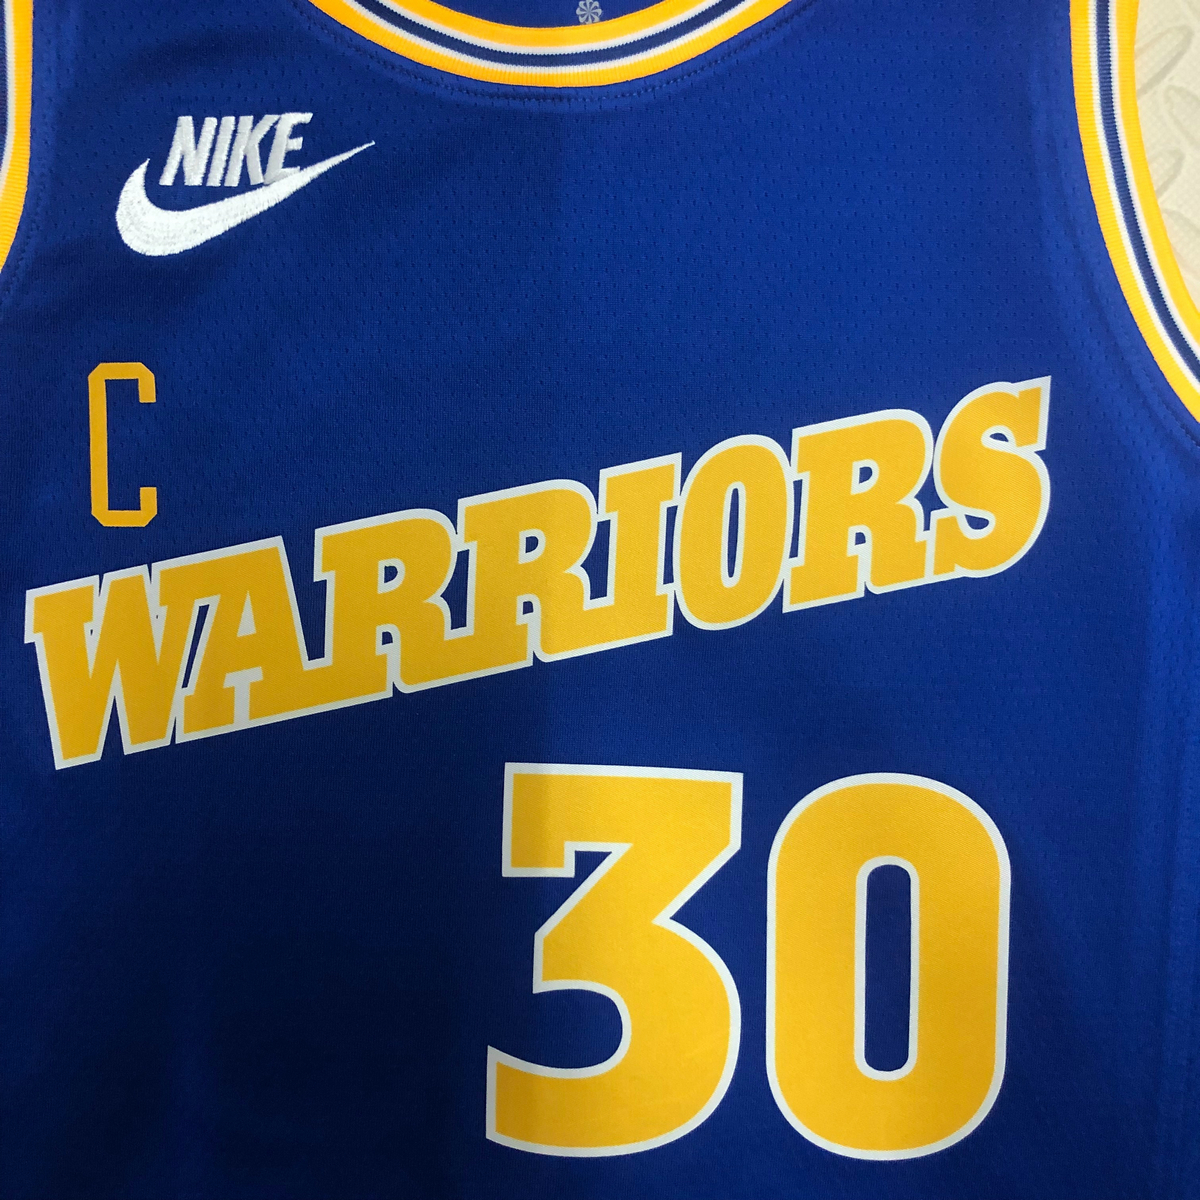 Buy Men's Jerseys - NBA Golden State Warriors #30 Stephen Curry Mesh  Basketball Jersey Swingman Edition Unisex Sleeveless T-shirt Online at  desertcartINDIA